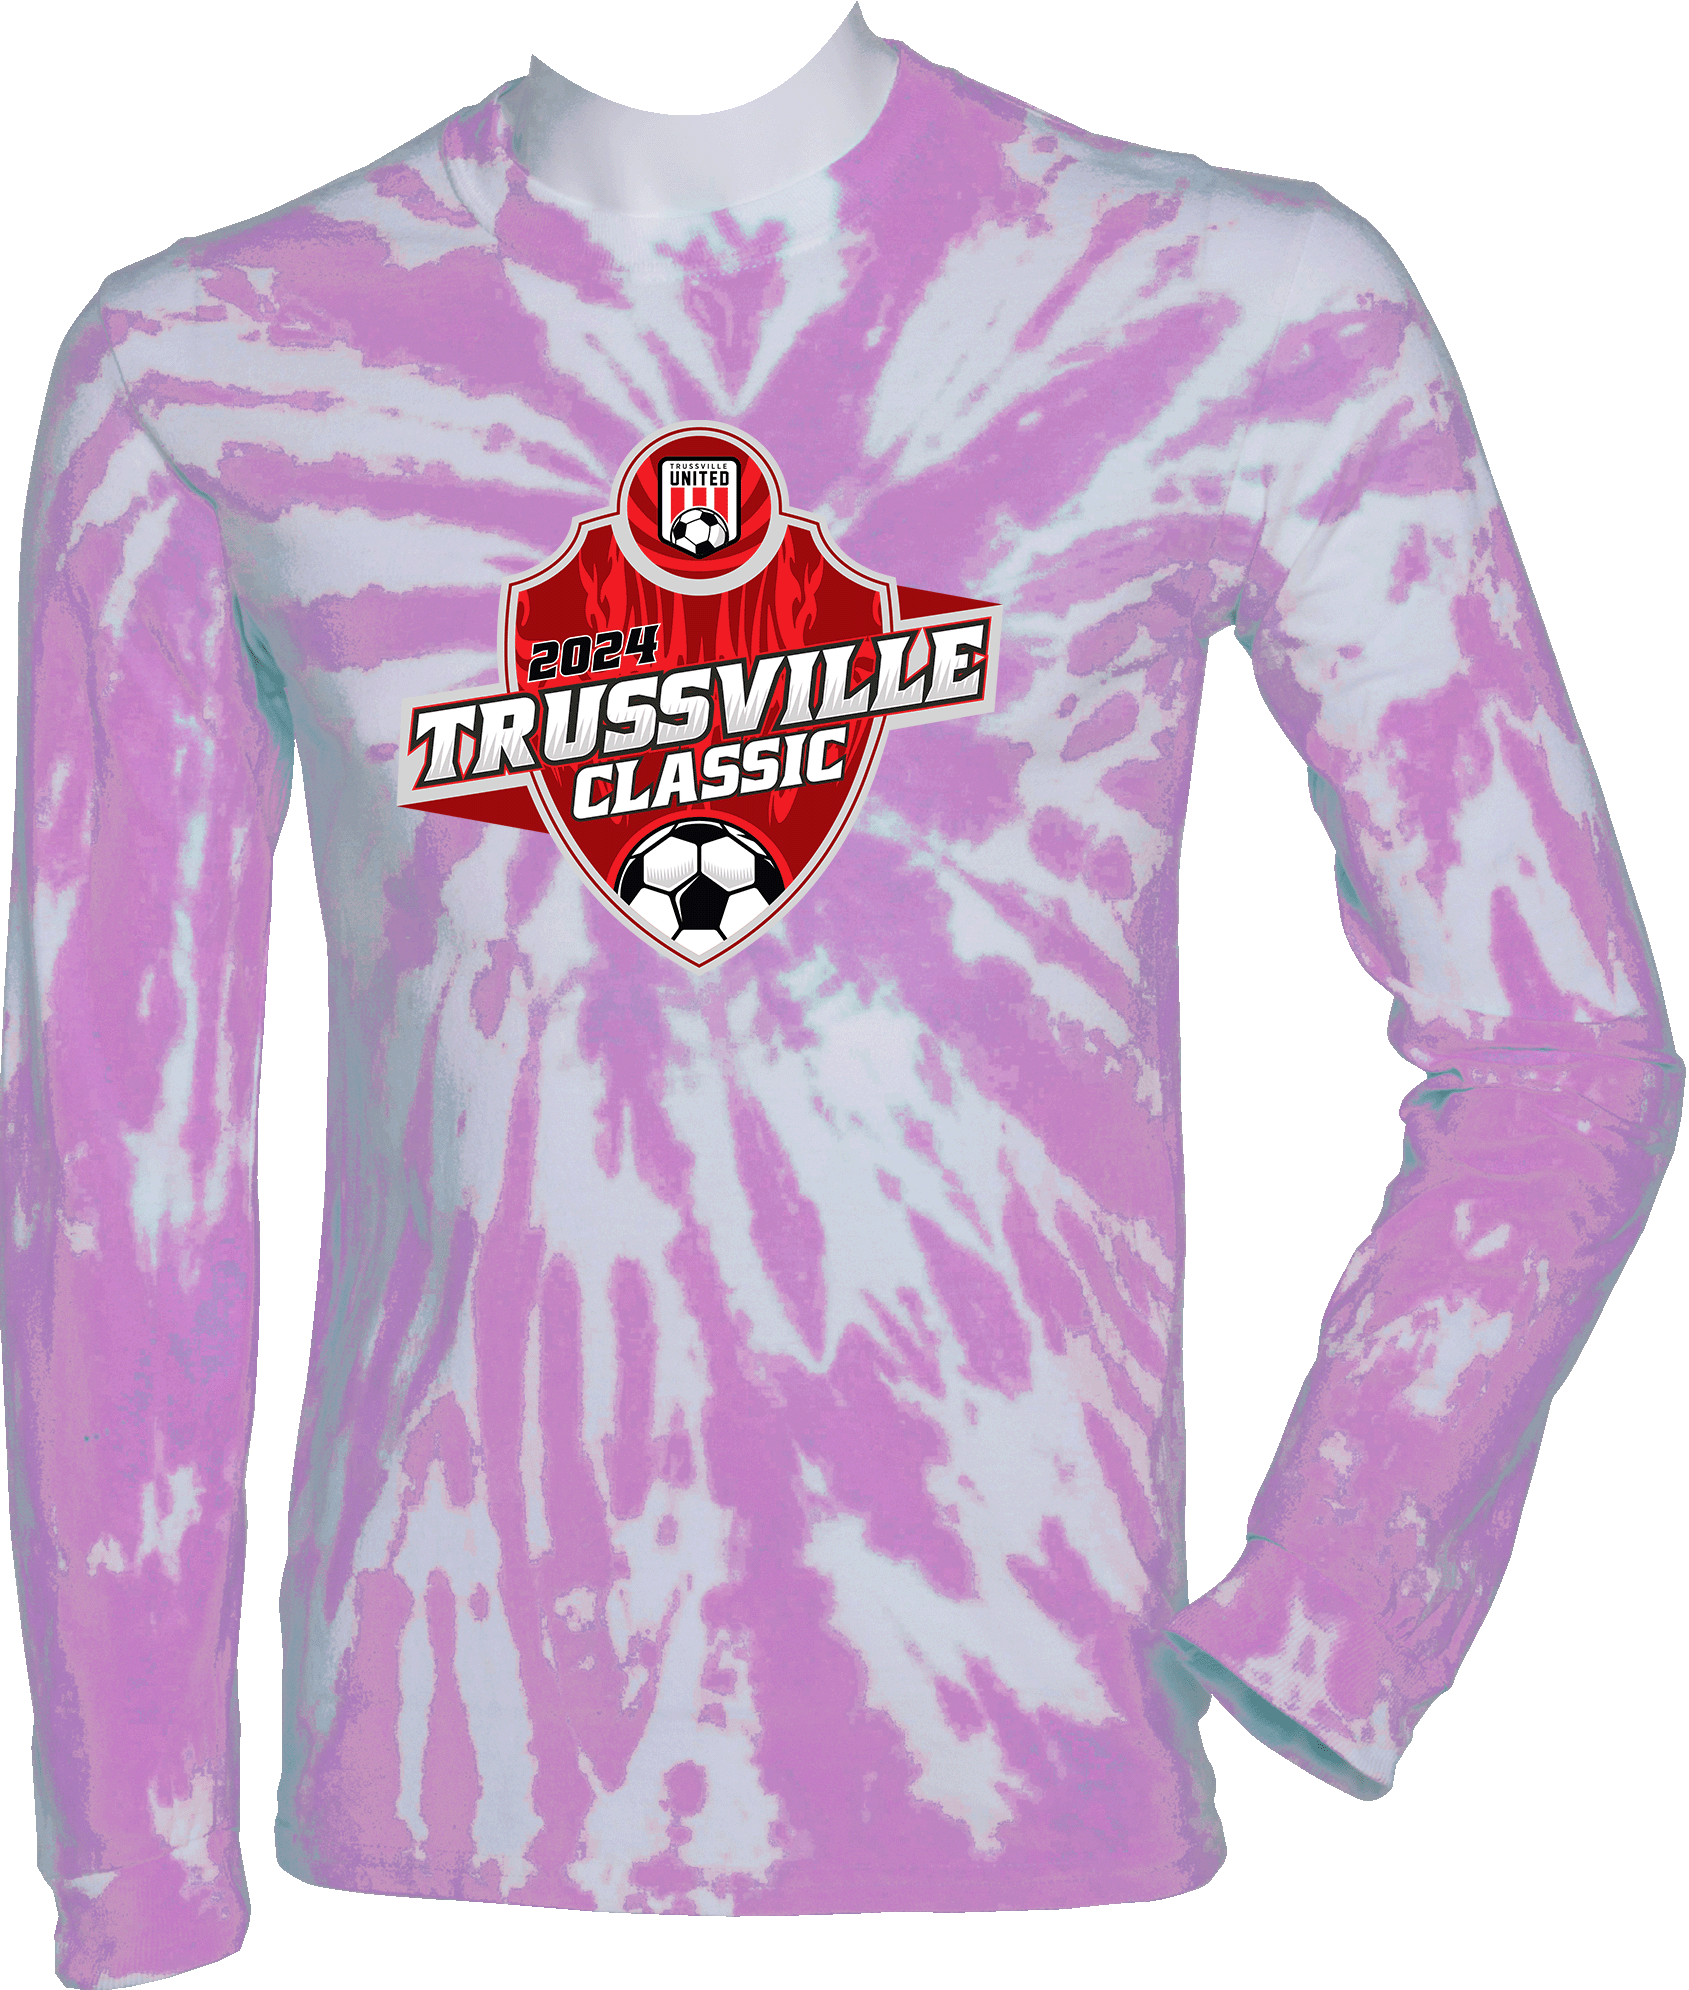 Tie-Dye Long Sleeves - 2024 Trussville Classic